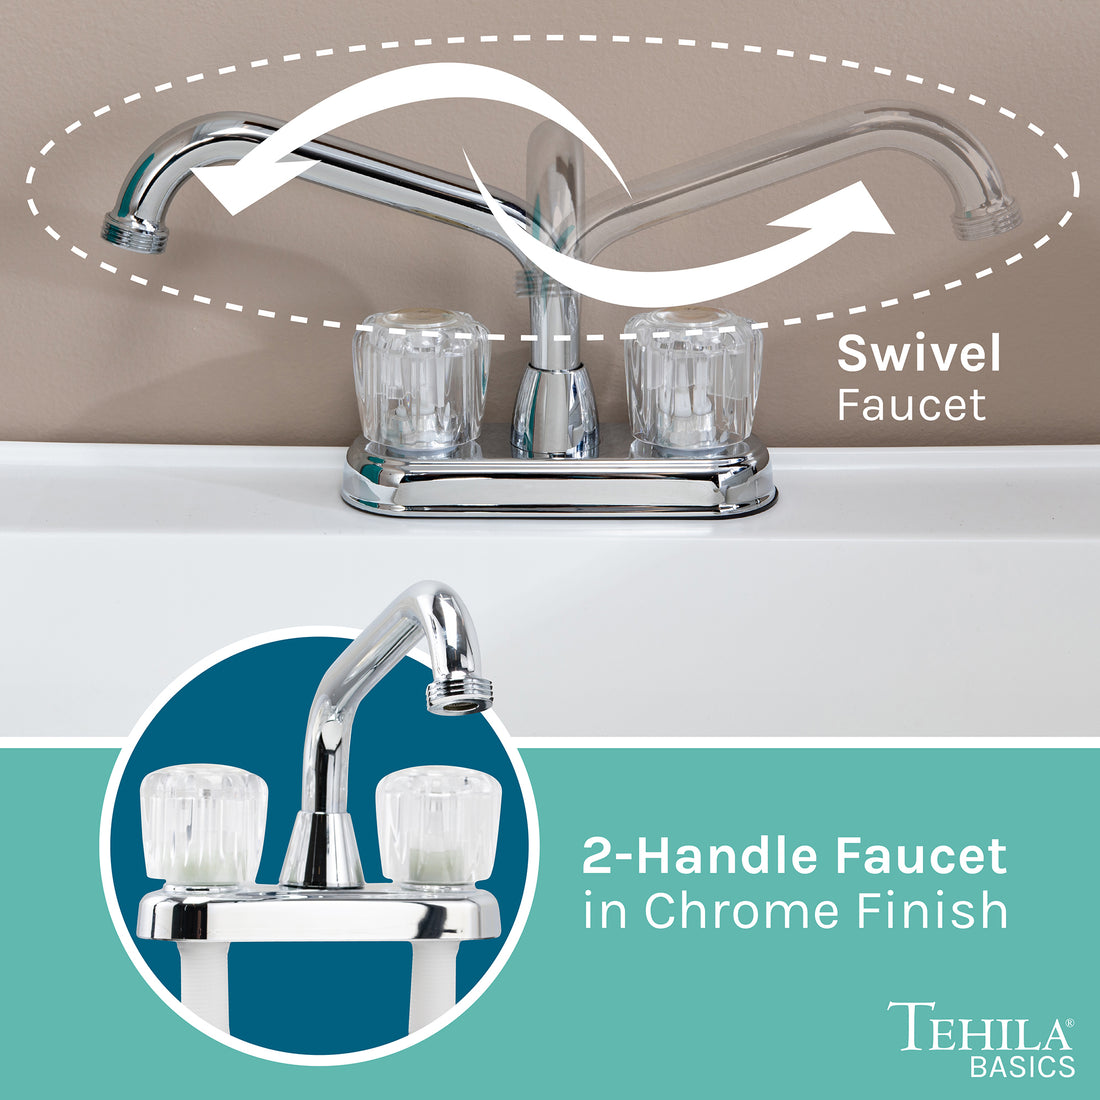 Tehila Basics Freestanding White Utility Sink with Chrome Finish Dual Handle Utility Faucet - Utility sinks vanites Tehila